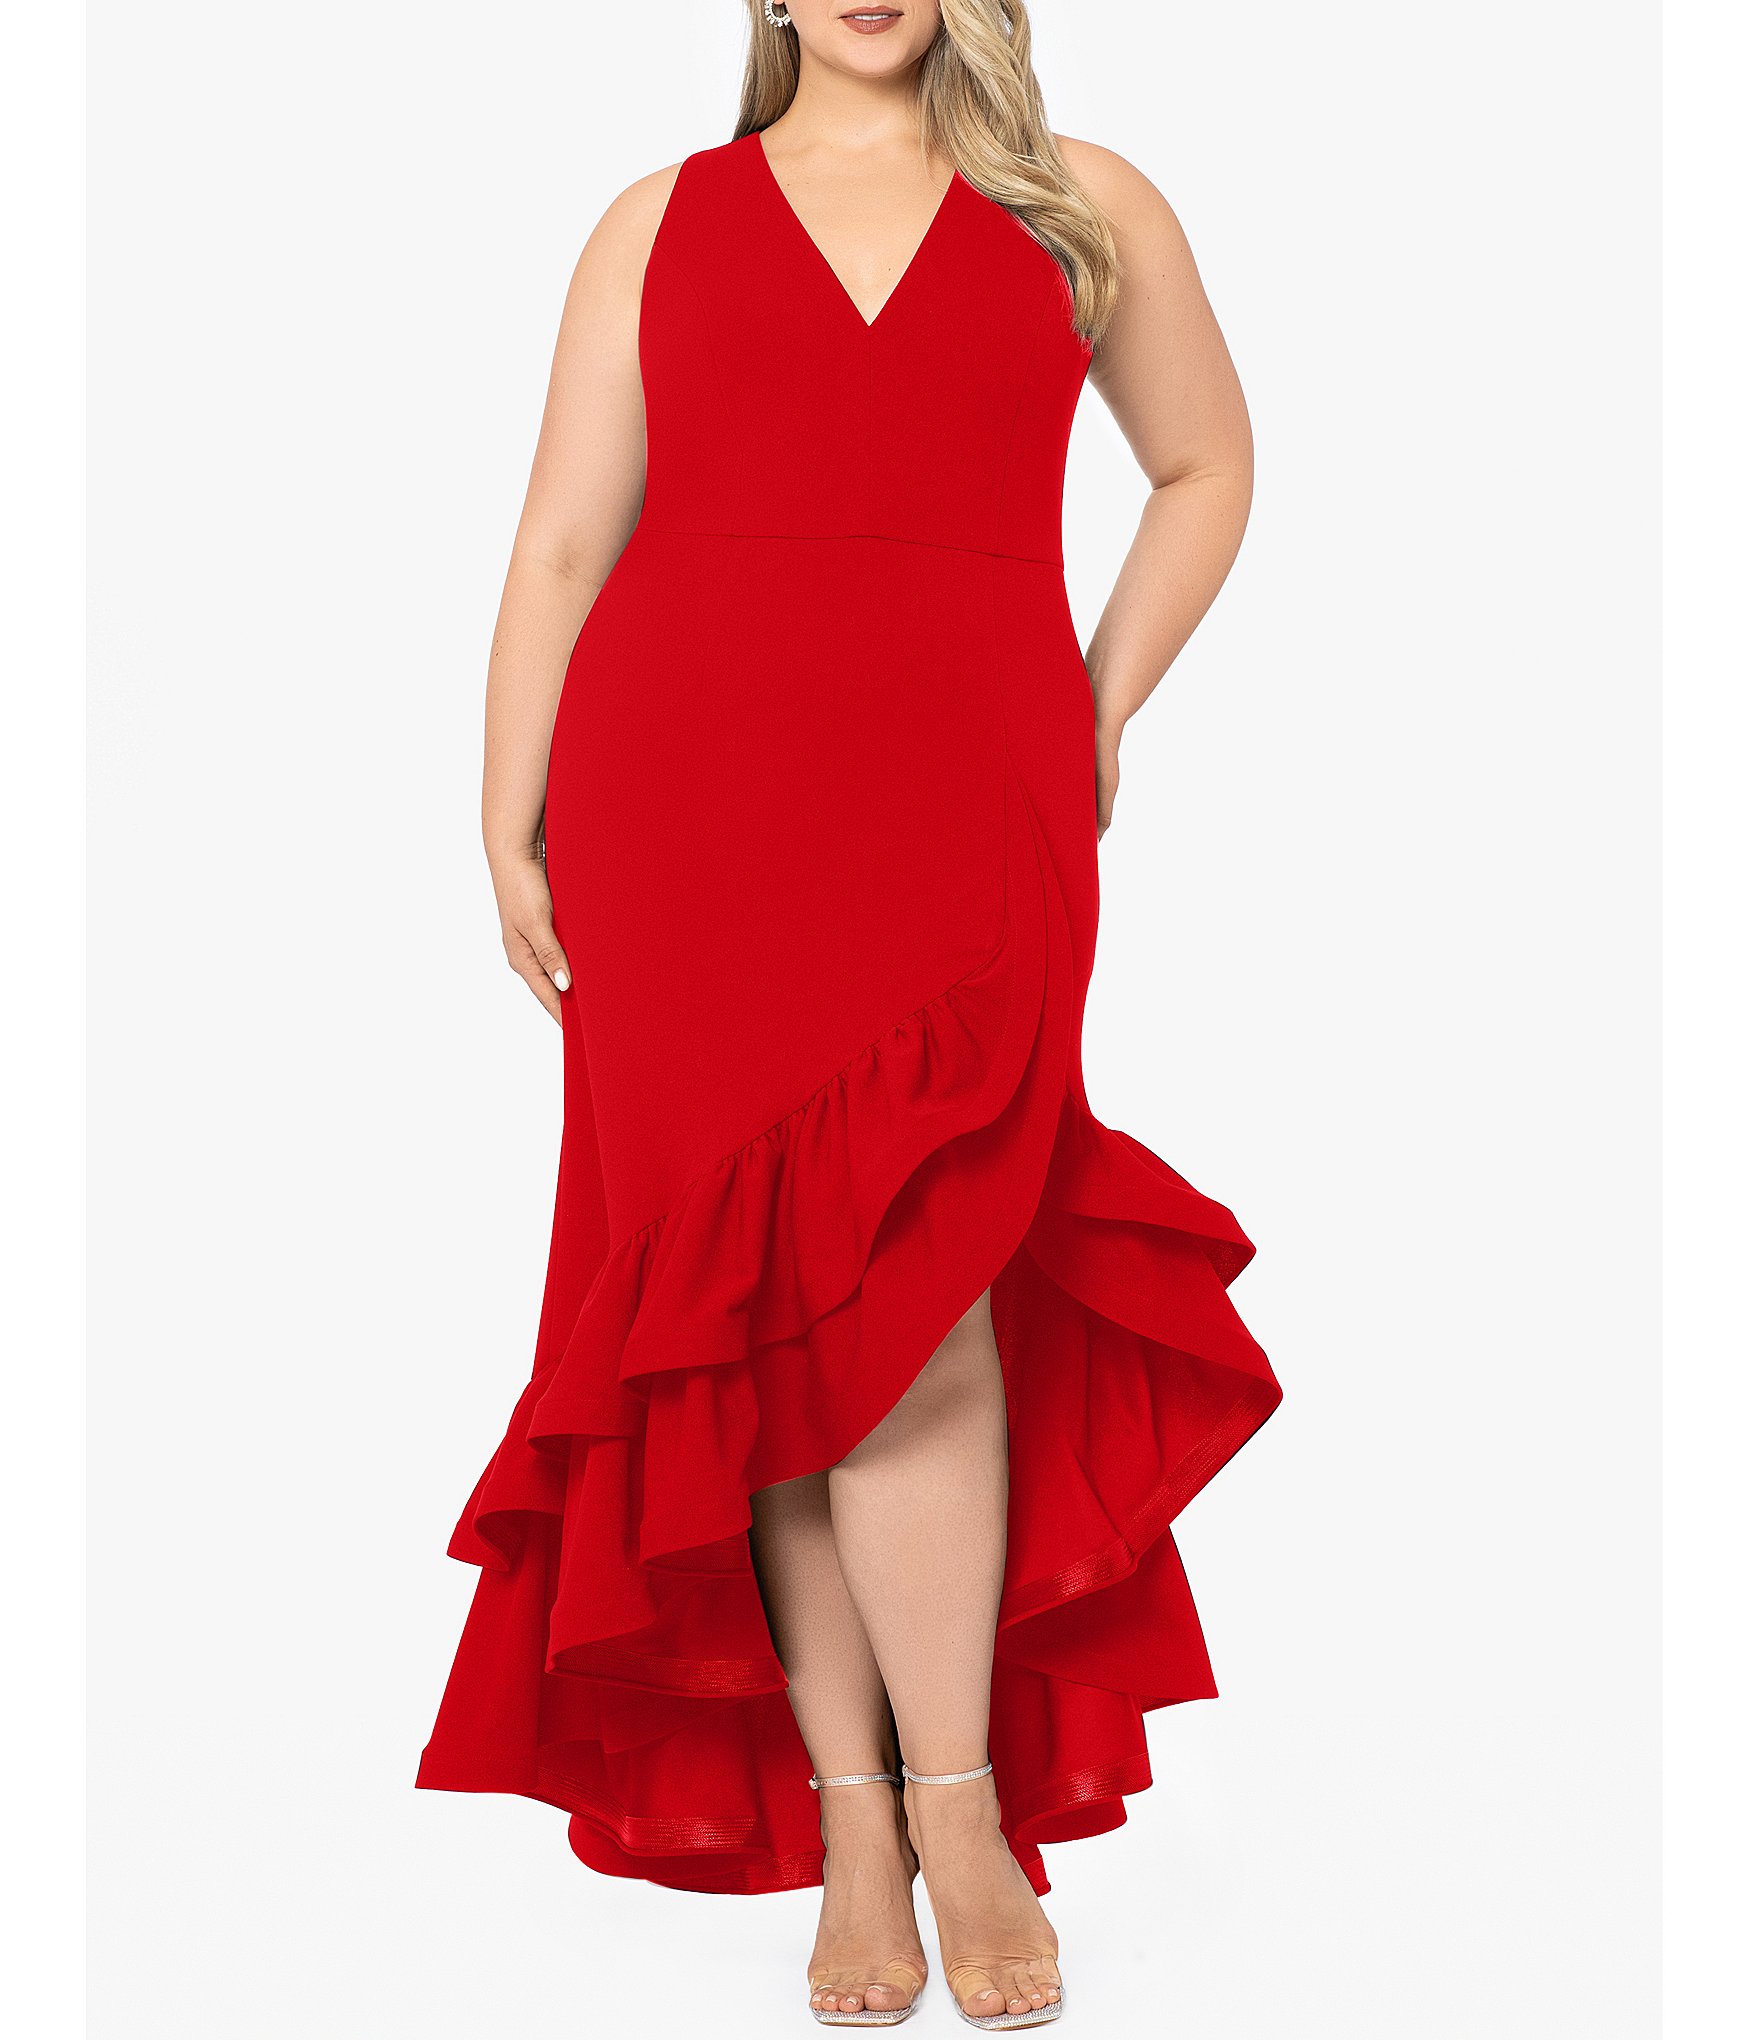 Red Cocktail Dress - Splendid Red Cocktail Dresses